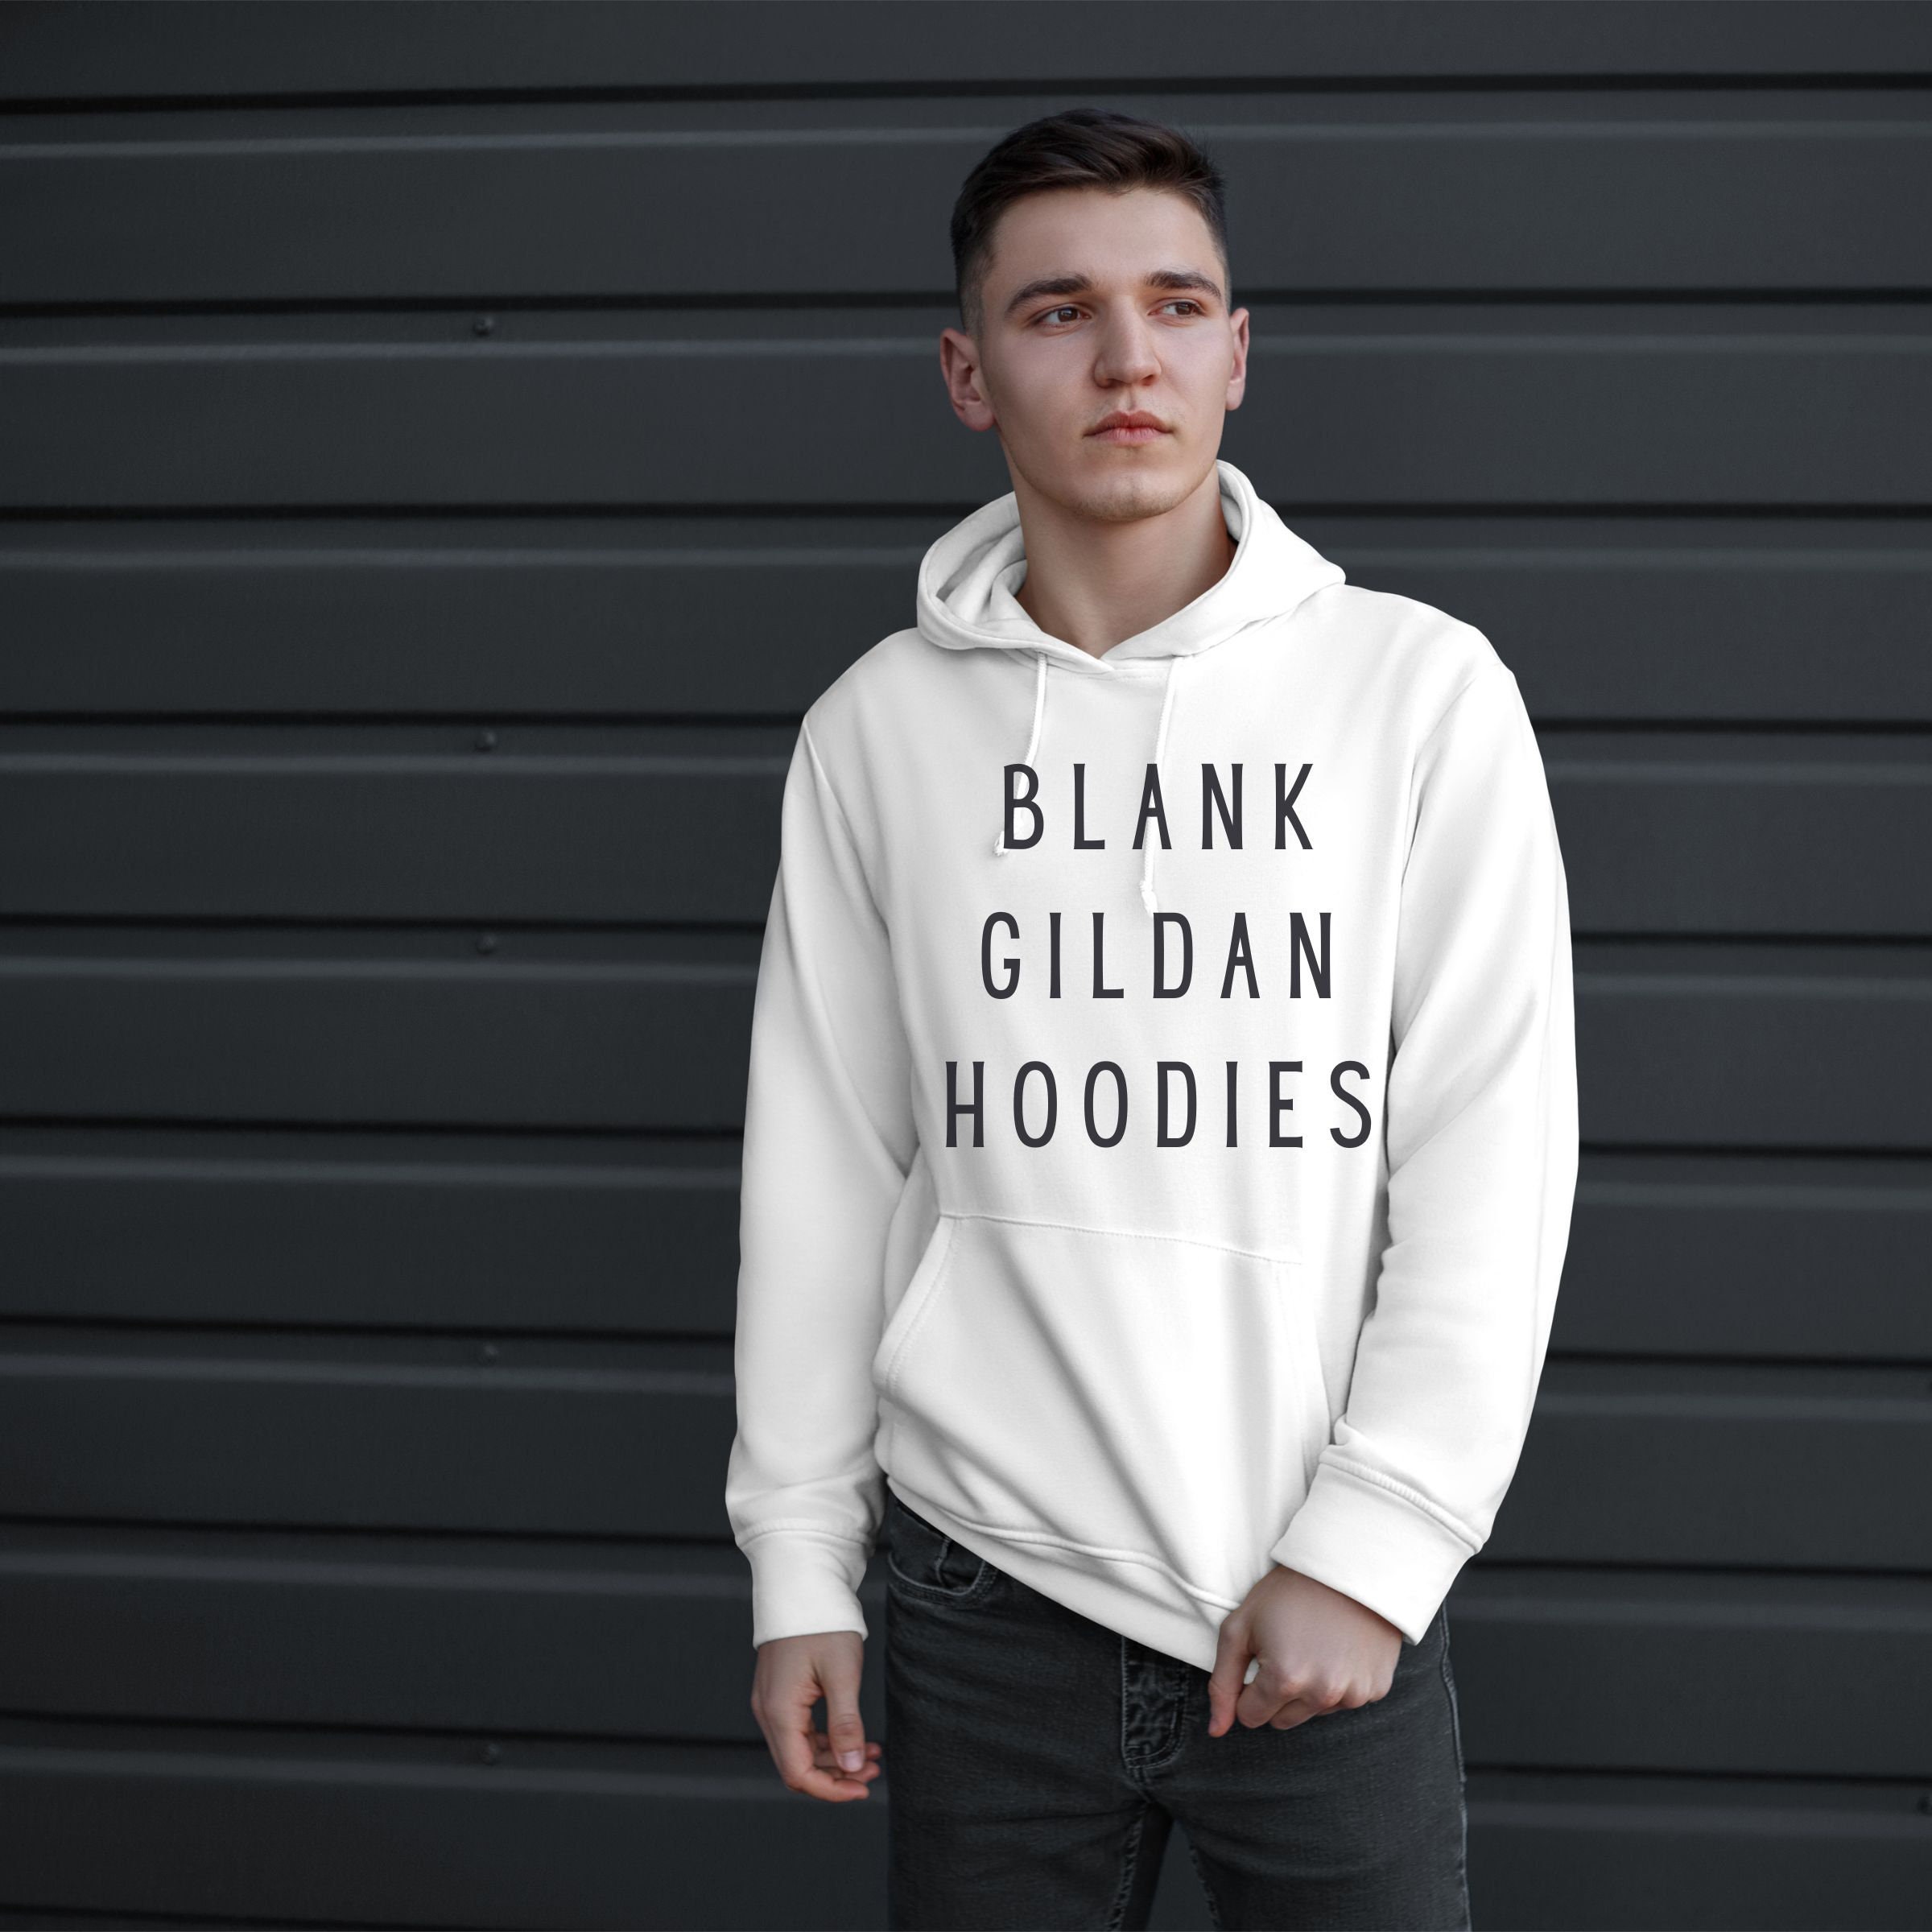 The sweatshirts weve sublimated on this year: Gildan heavyblend